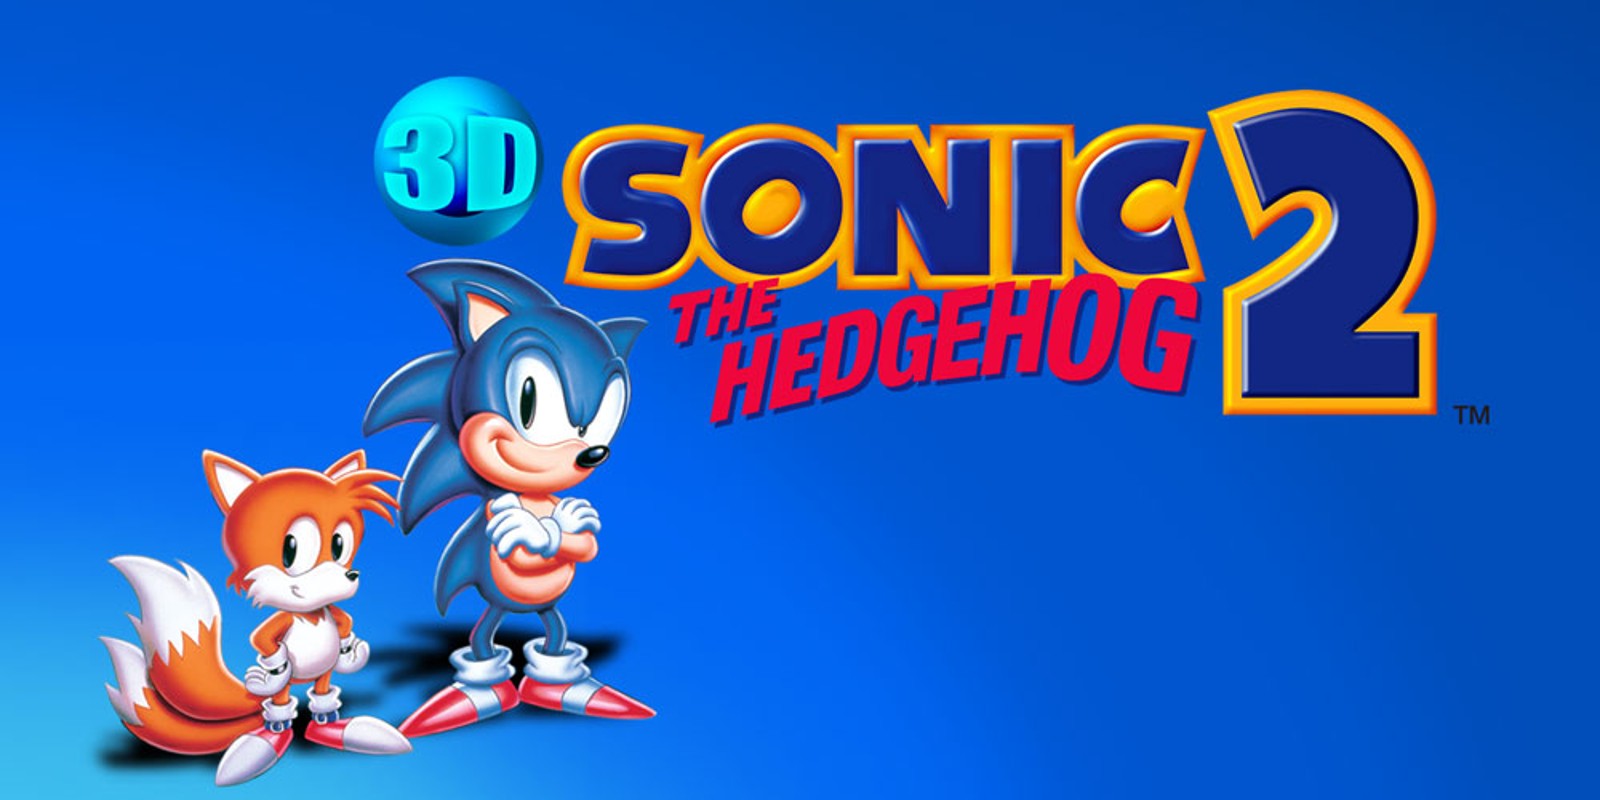 3D Sonic The Hedgehog 2 | Nintendo 3DS download software | Games | Nintendo1600 x 800